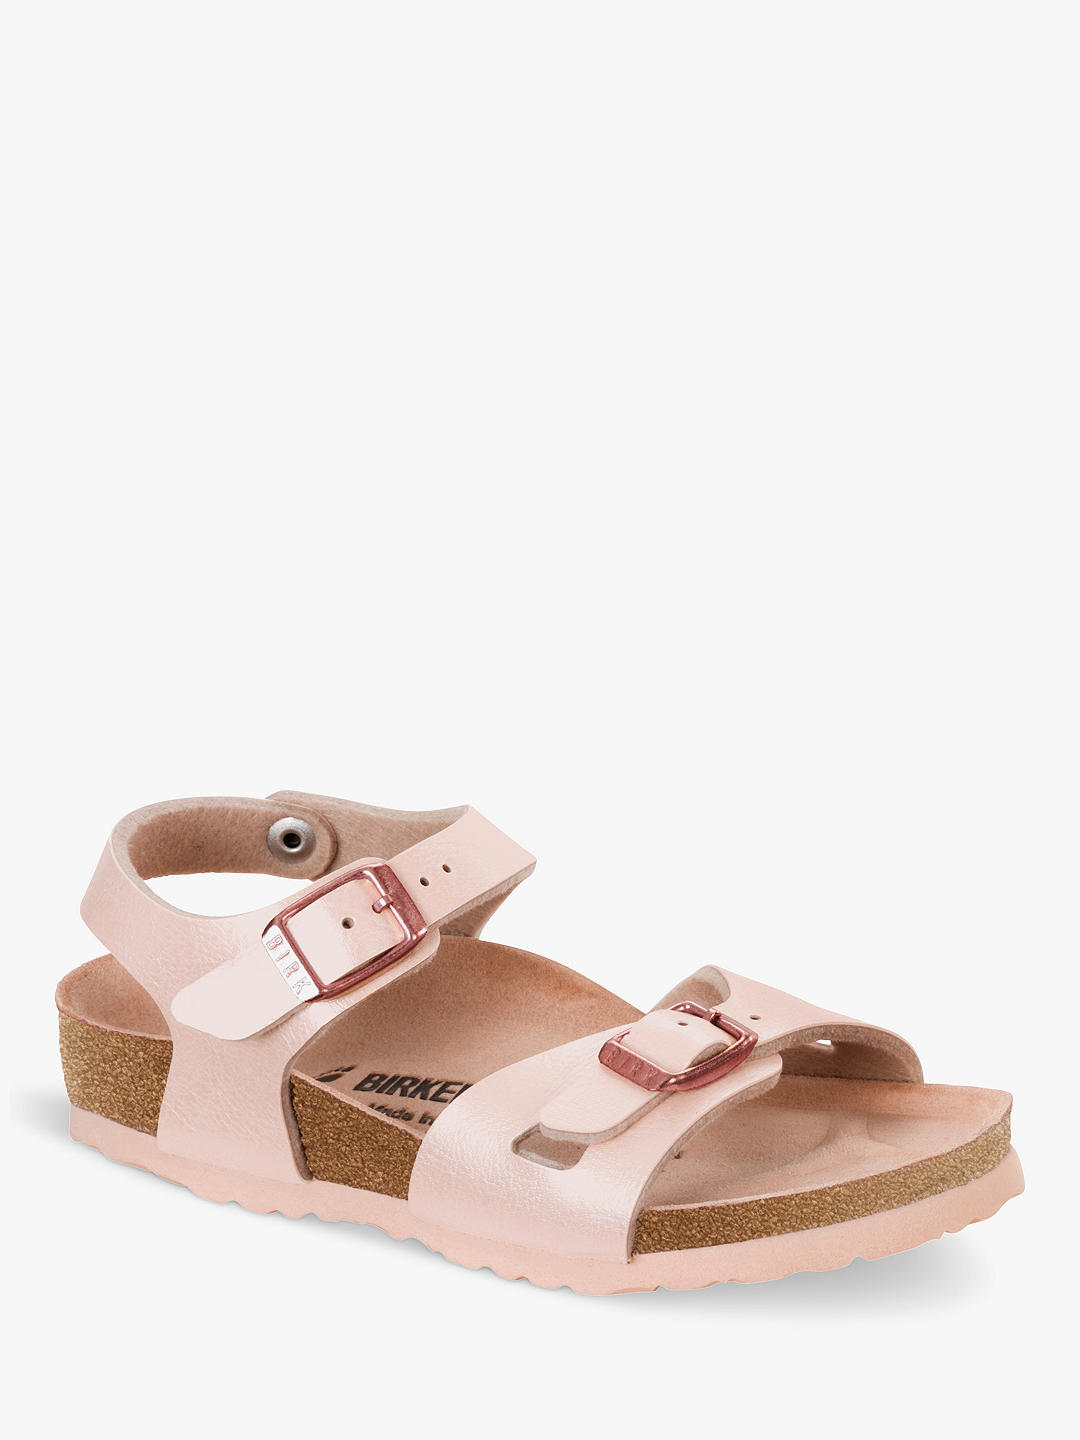 Birkenstock Kids' Rio Sandals, Light Pink